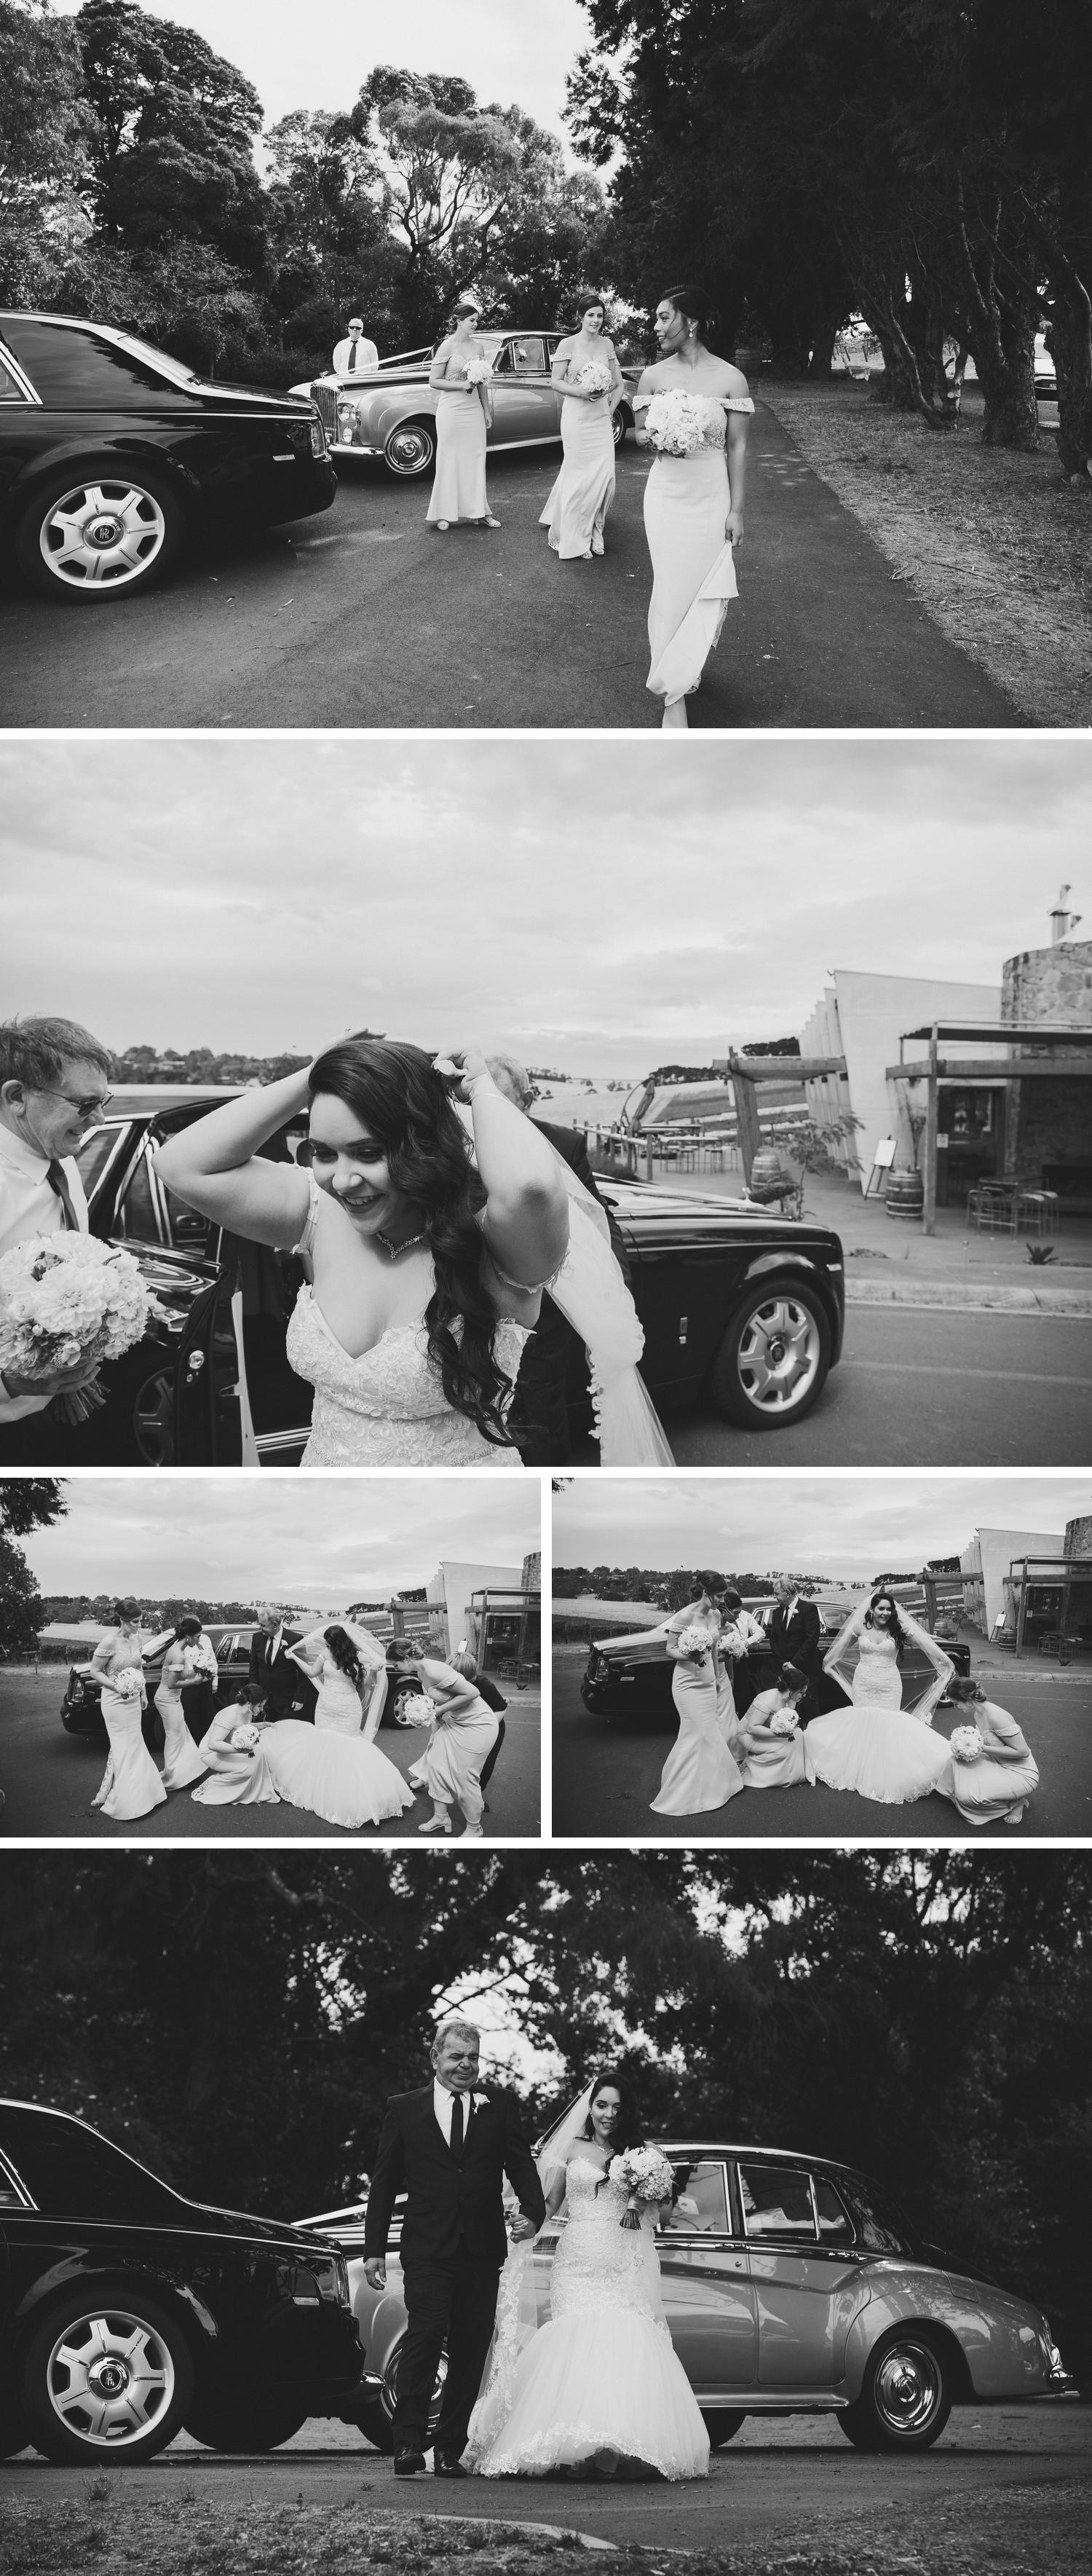 Hoggett Kitchen Wedding, Wild Dog Winery, Vinyeard Wedding in Warragul, Kristy and Glenn, photography by Melbourne Photographer Danae Studios, Gippsland, Bass Coast